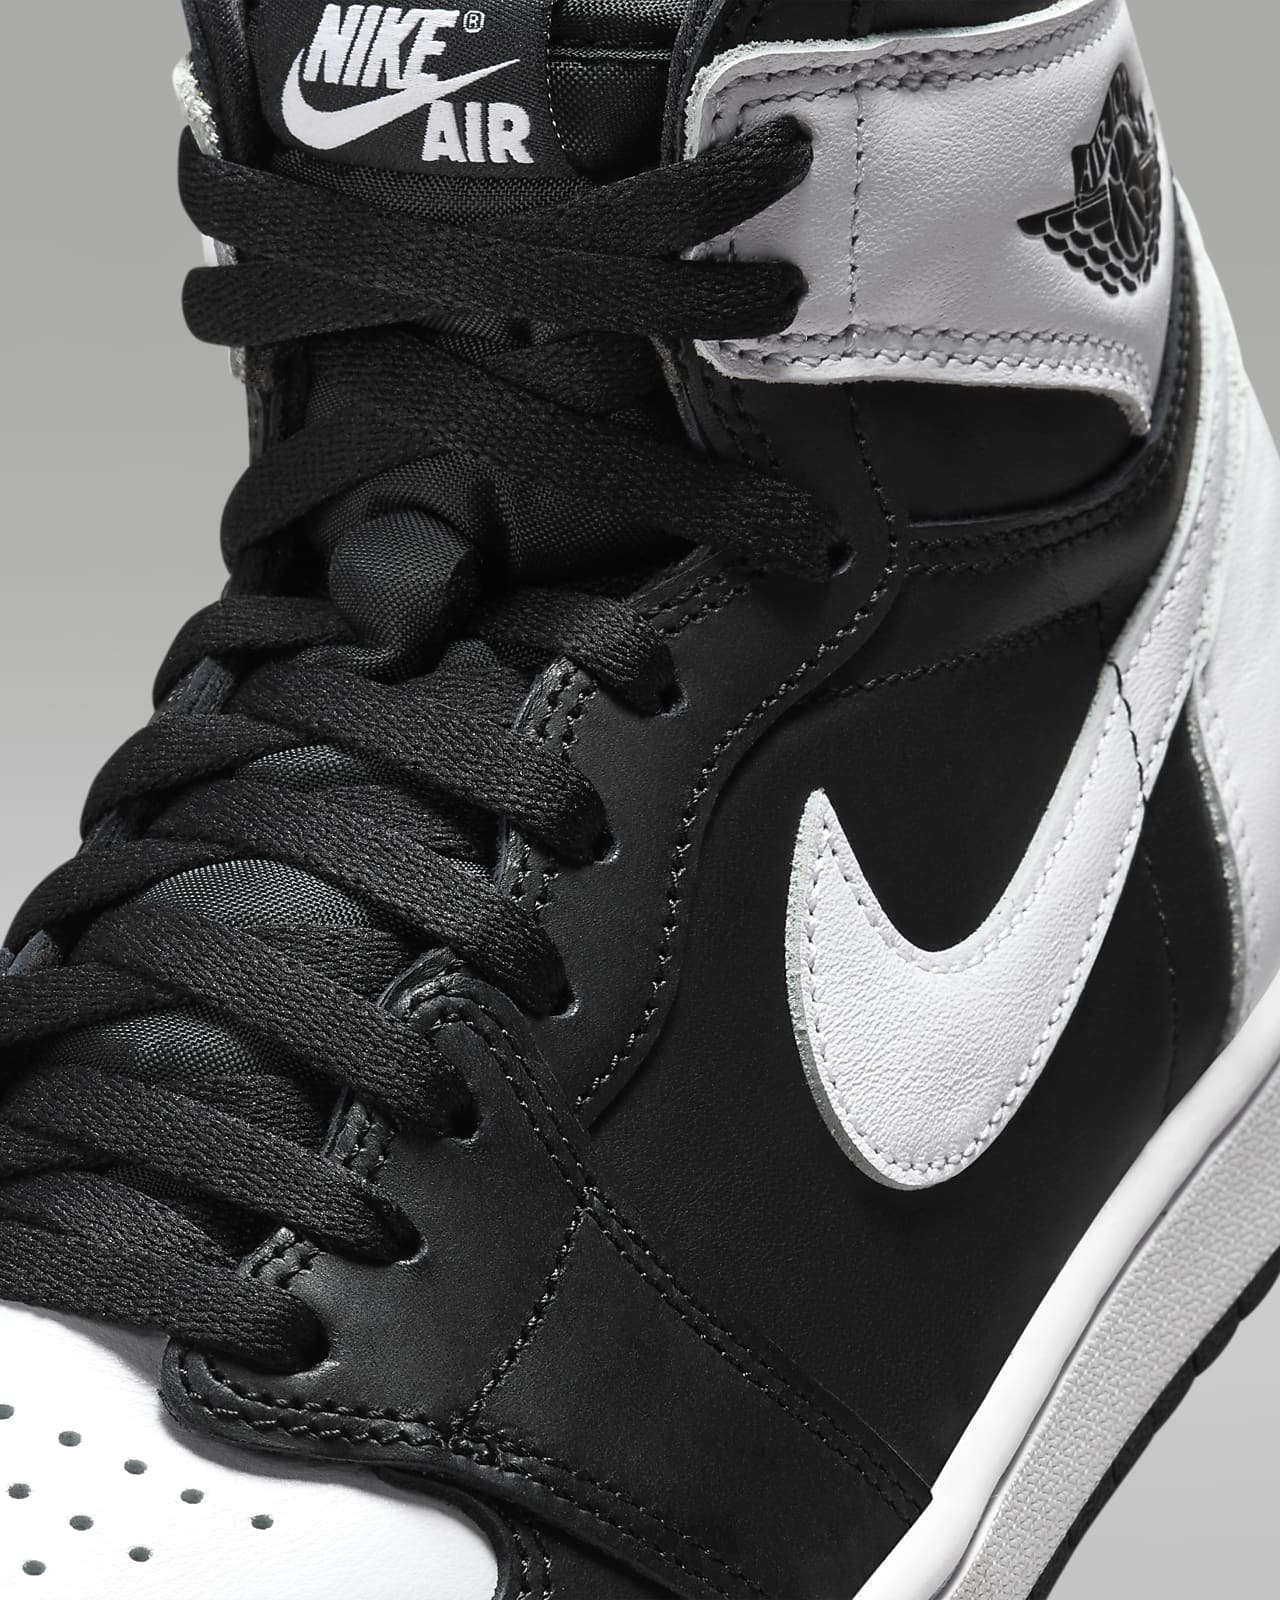 Nike Air Jordan 1 Retro OG Black/White宜しくお願いします - 靴